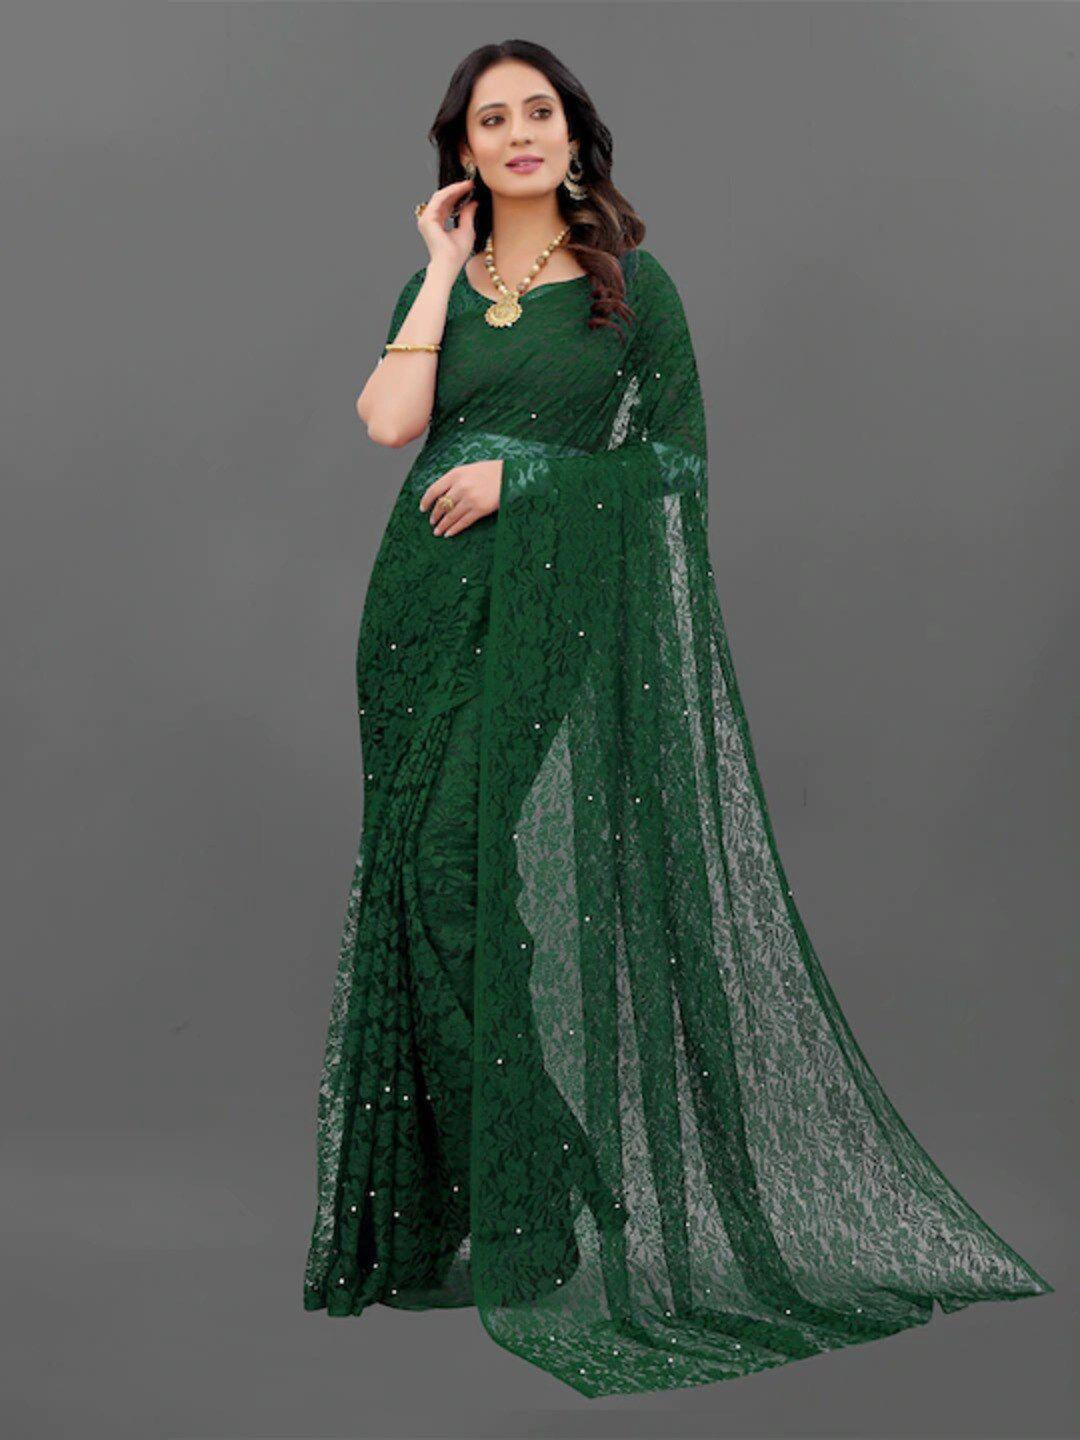 moksha designs green embellished beads and stones net saree